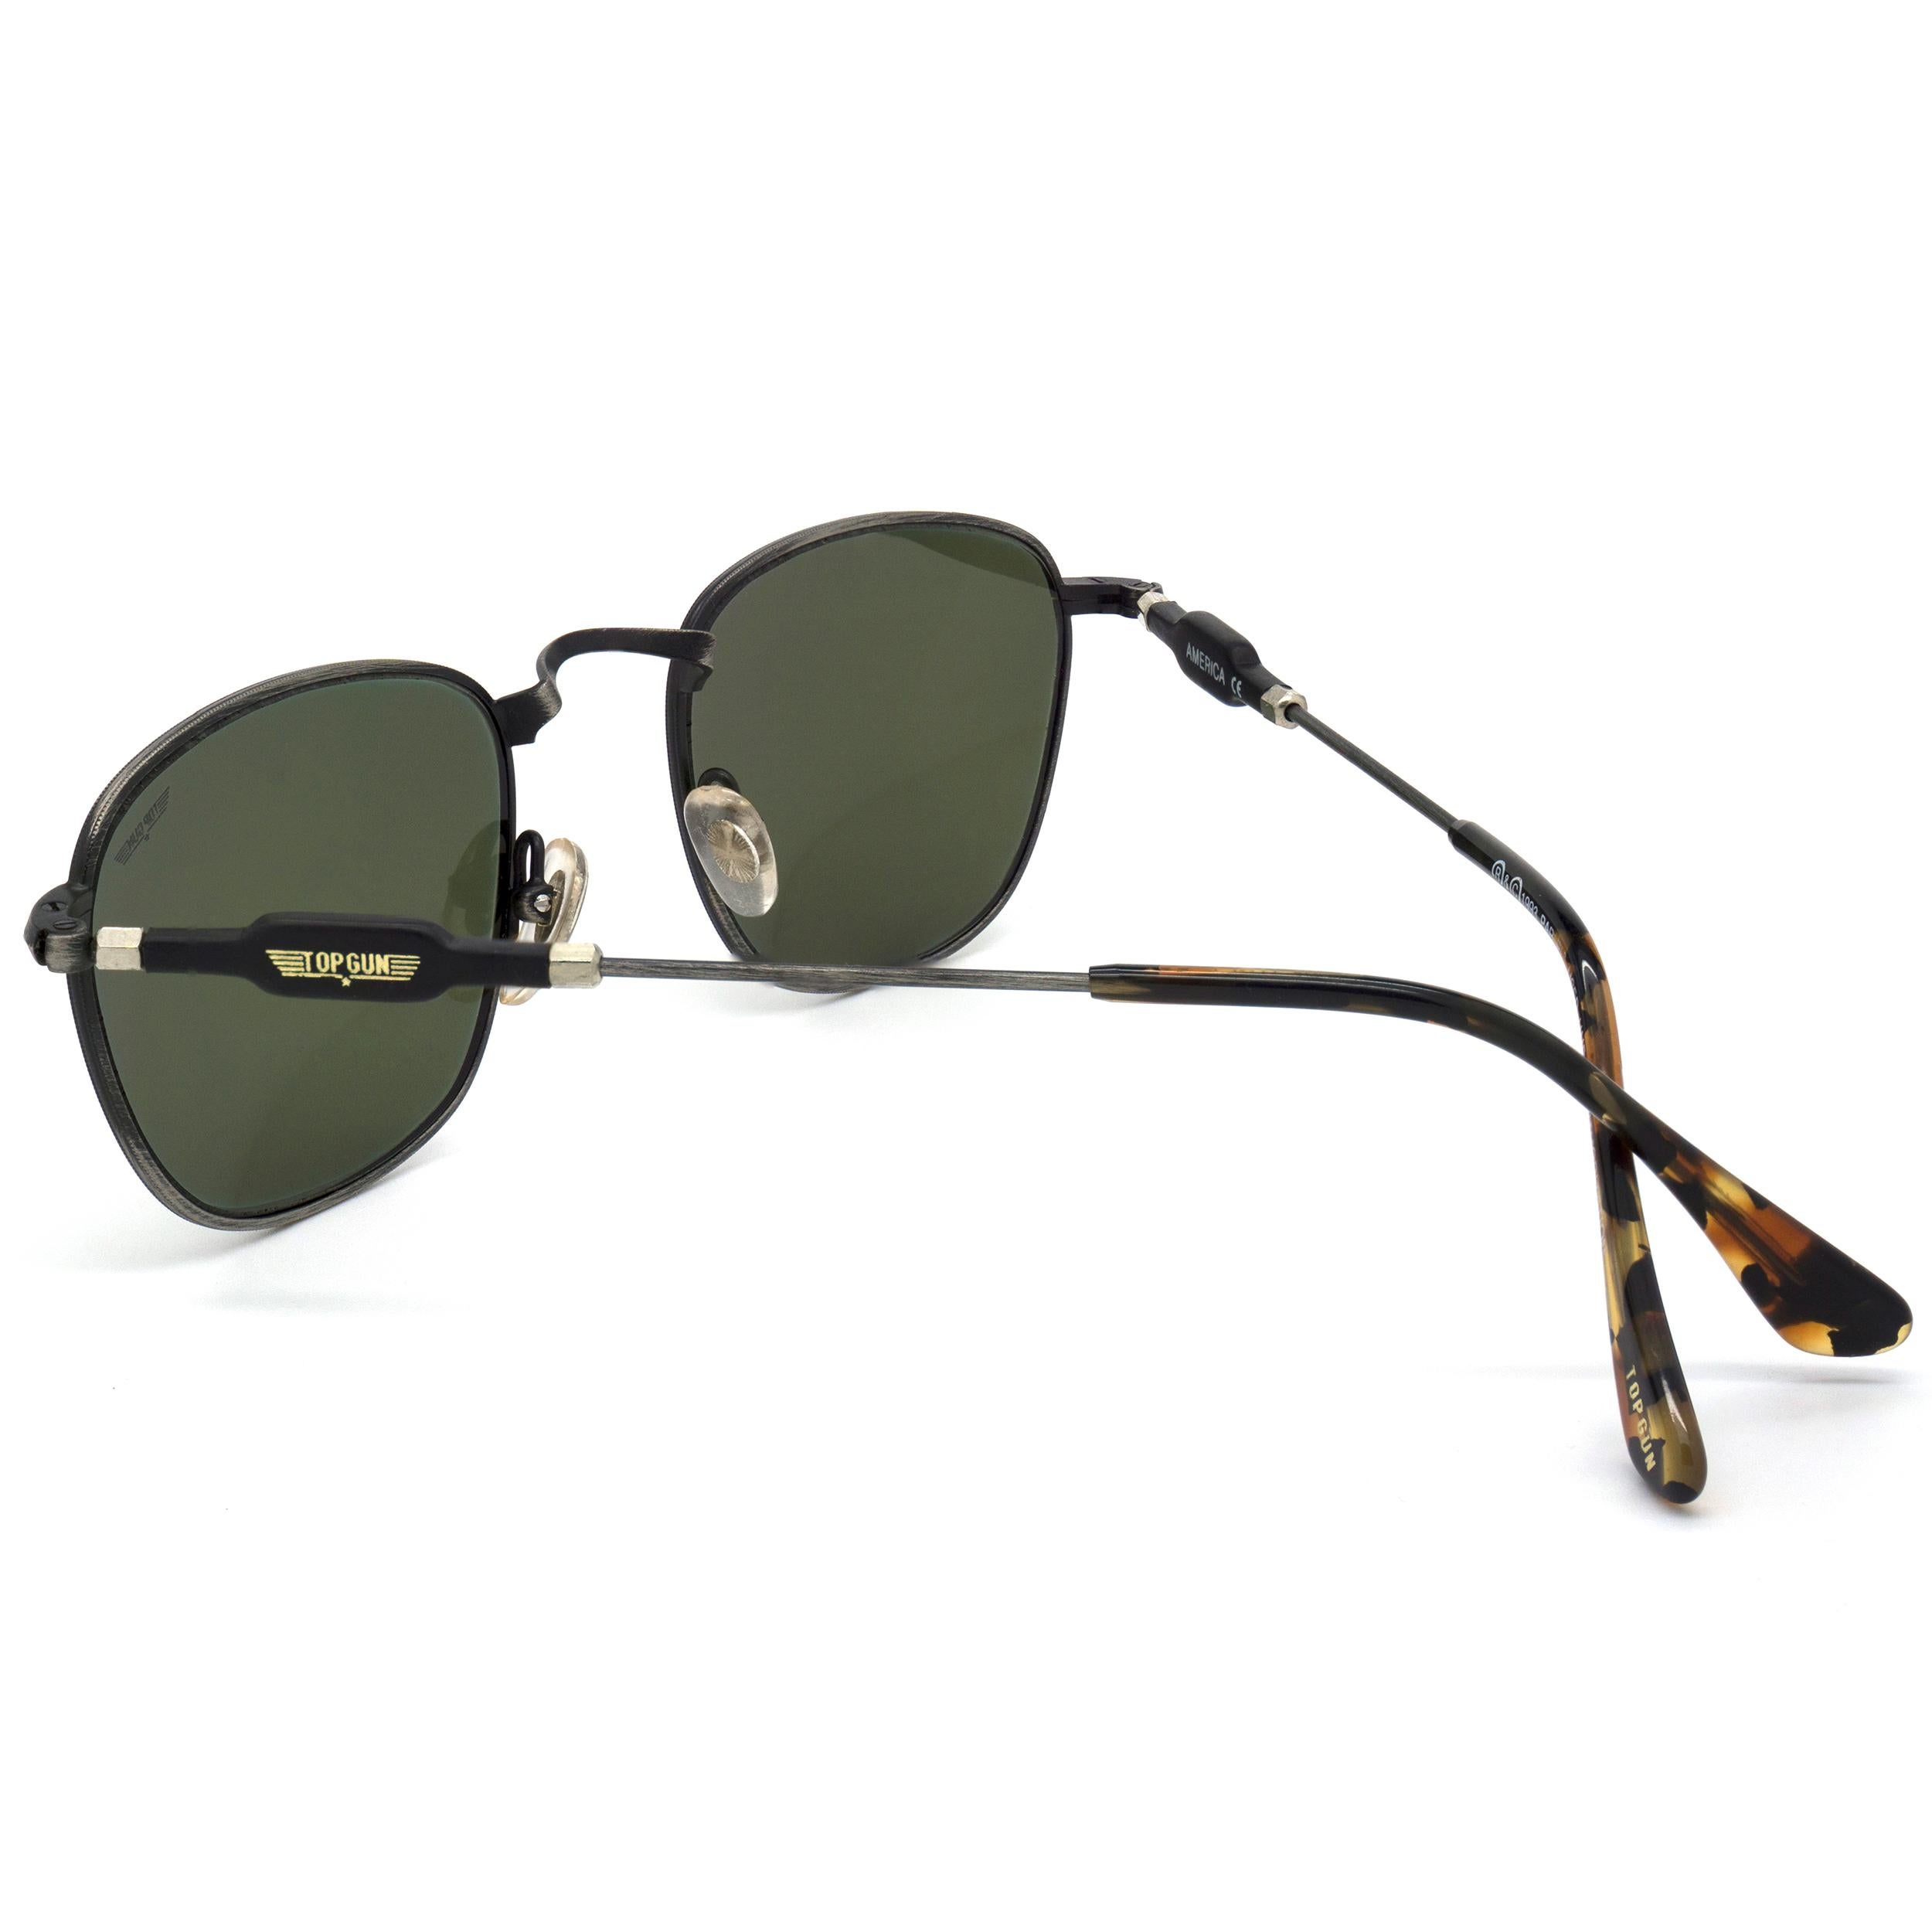 Black Top Gun square vintage sunglasses, Italy 90s For Sale